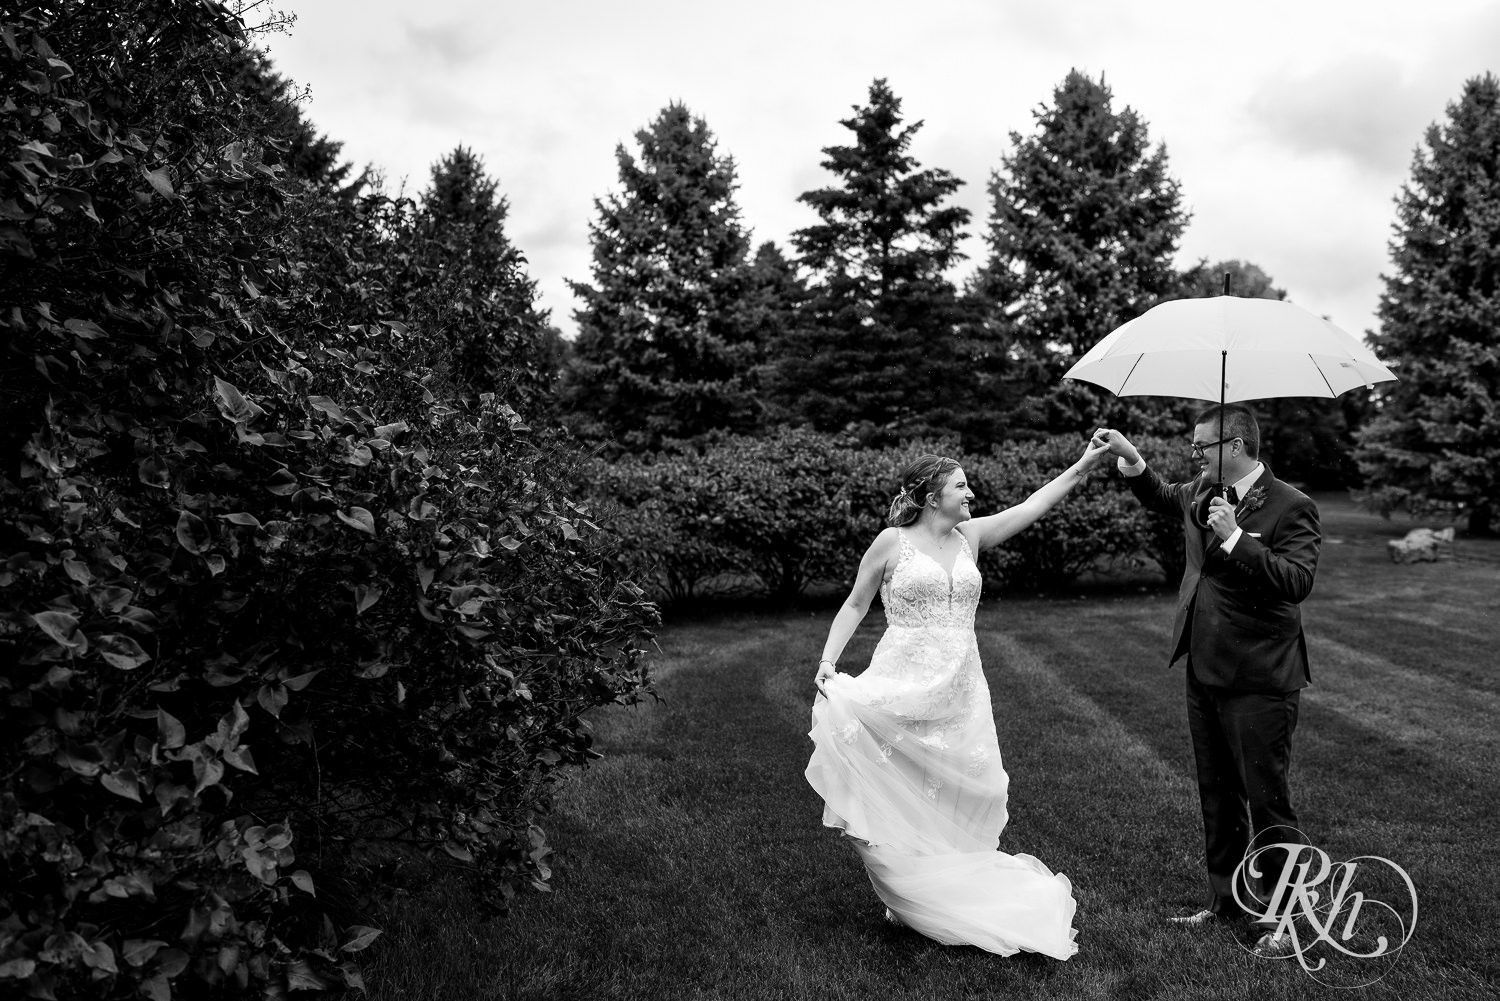 Bride and groom dancing under yellow umbrella on rainy day at Glenhaven Events in Farmington, Minnesota.